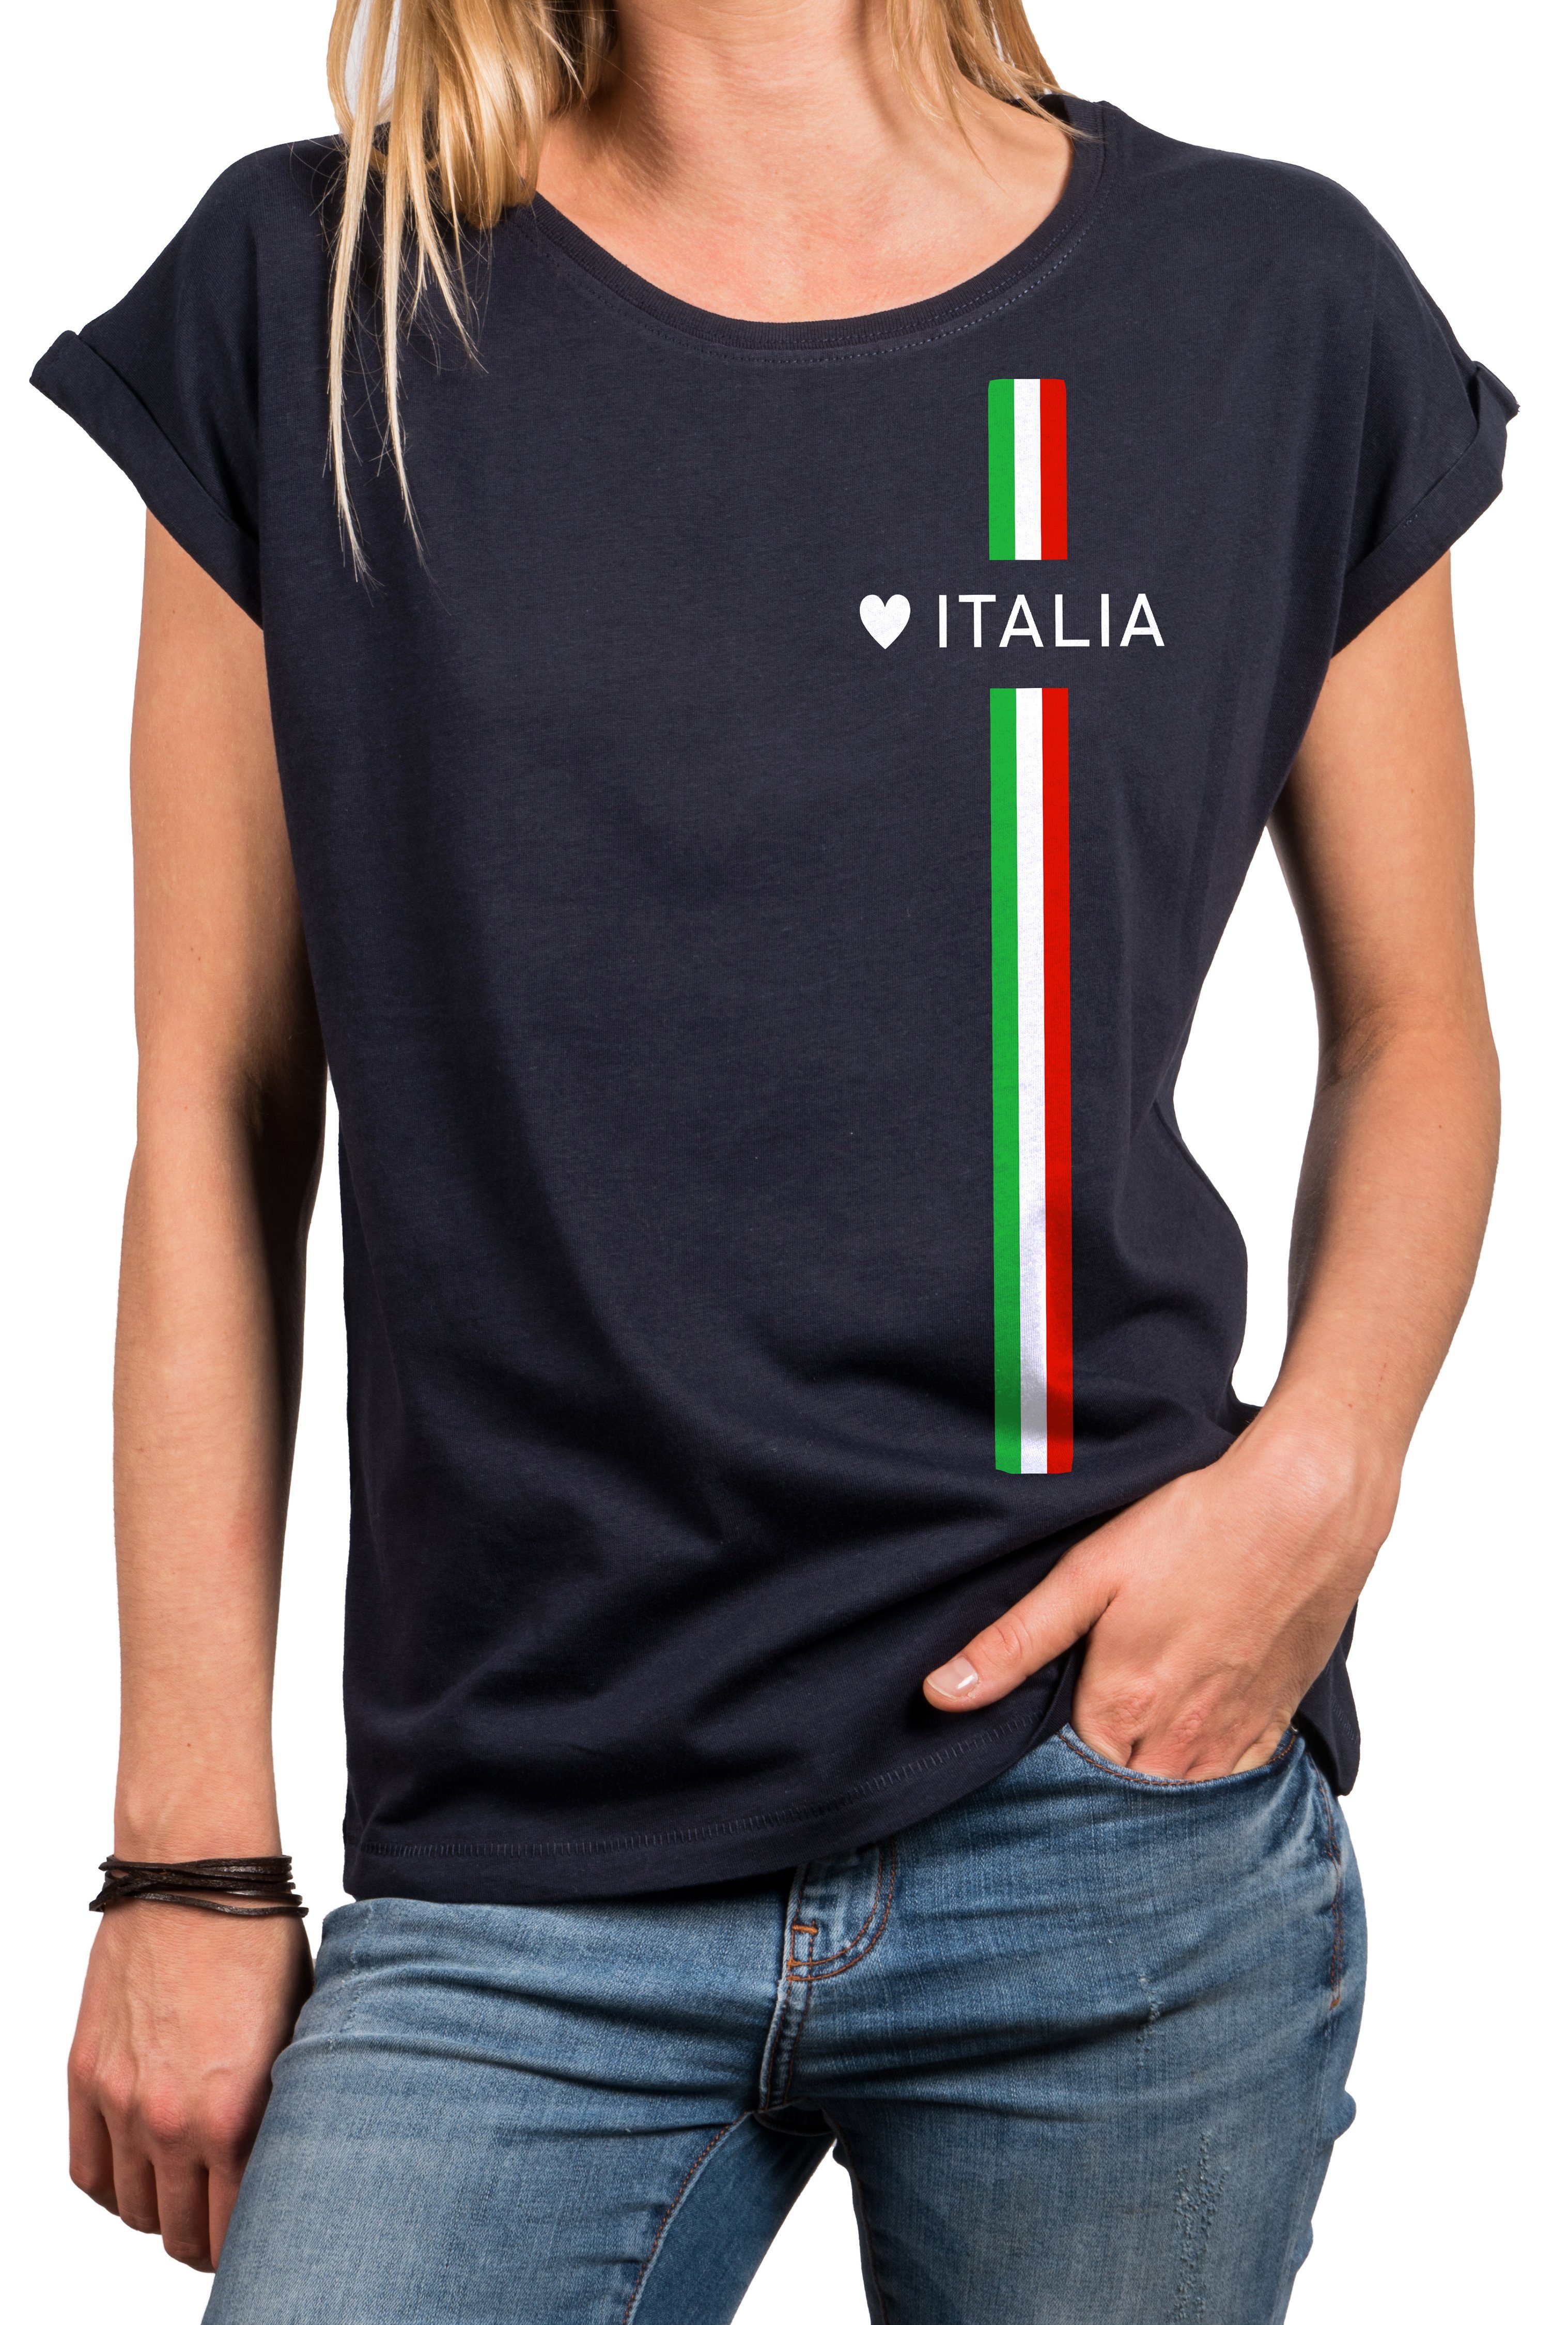 MAKAYA Print-Shirt Damen Italienische Mode Druck Style Italiano Kurzarmshirt, Italien Top mit Herz Italia Blau Trikot